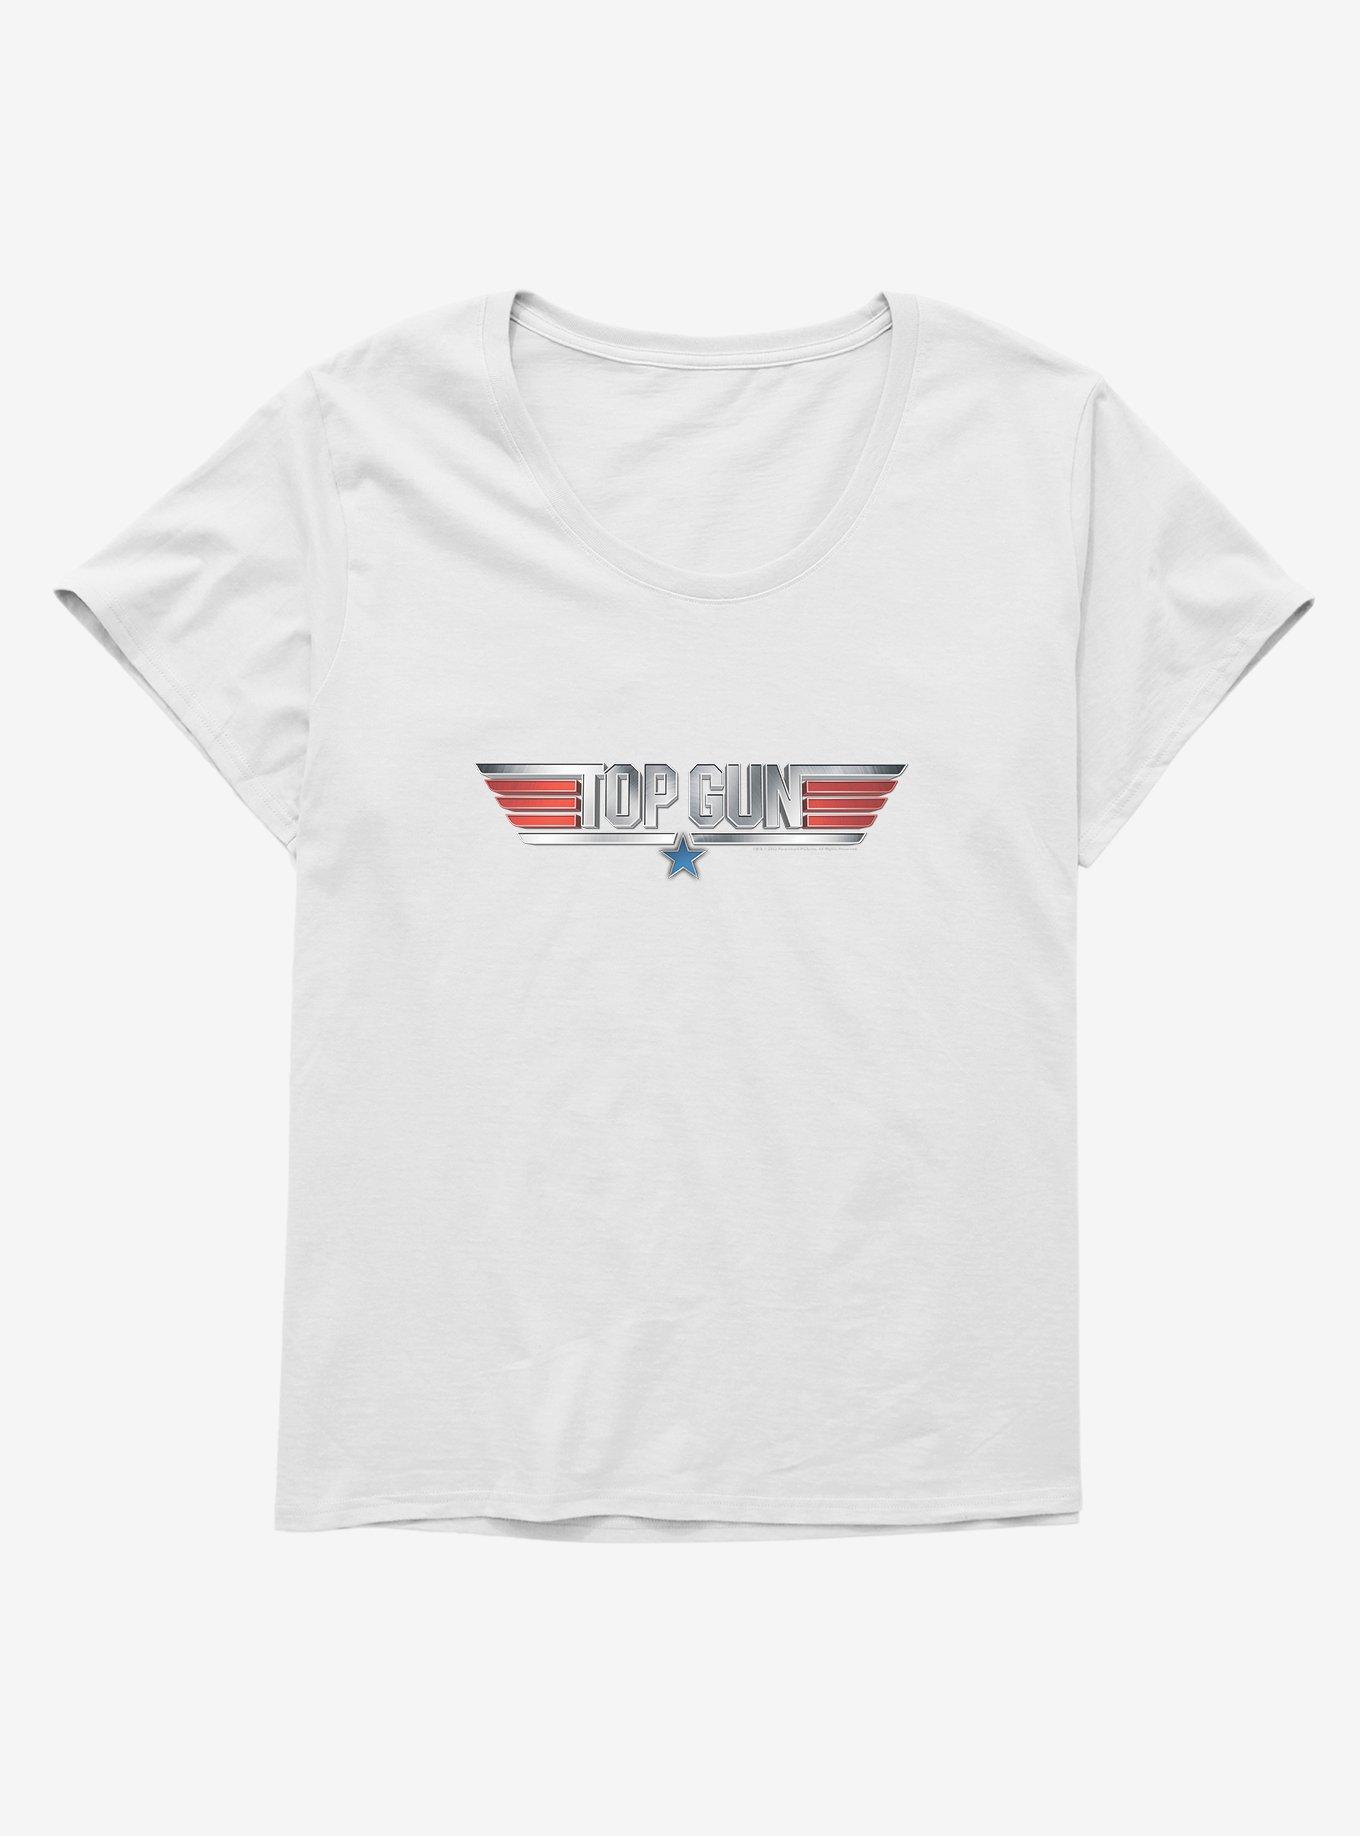 Men's Top Gun Need for Speed Classic Logo Graphic T-shirt